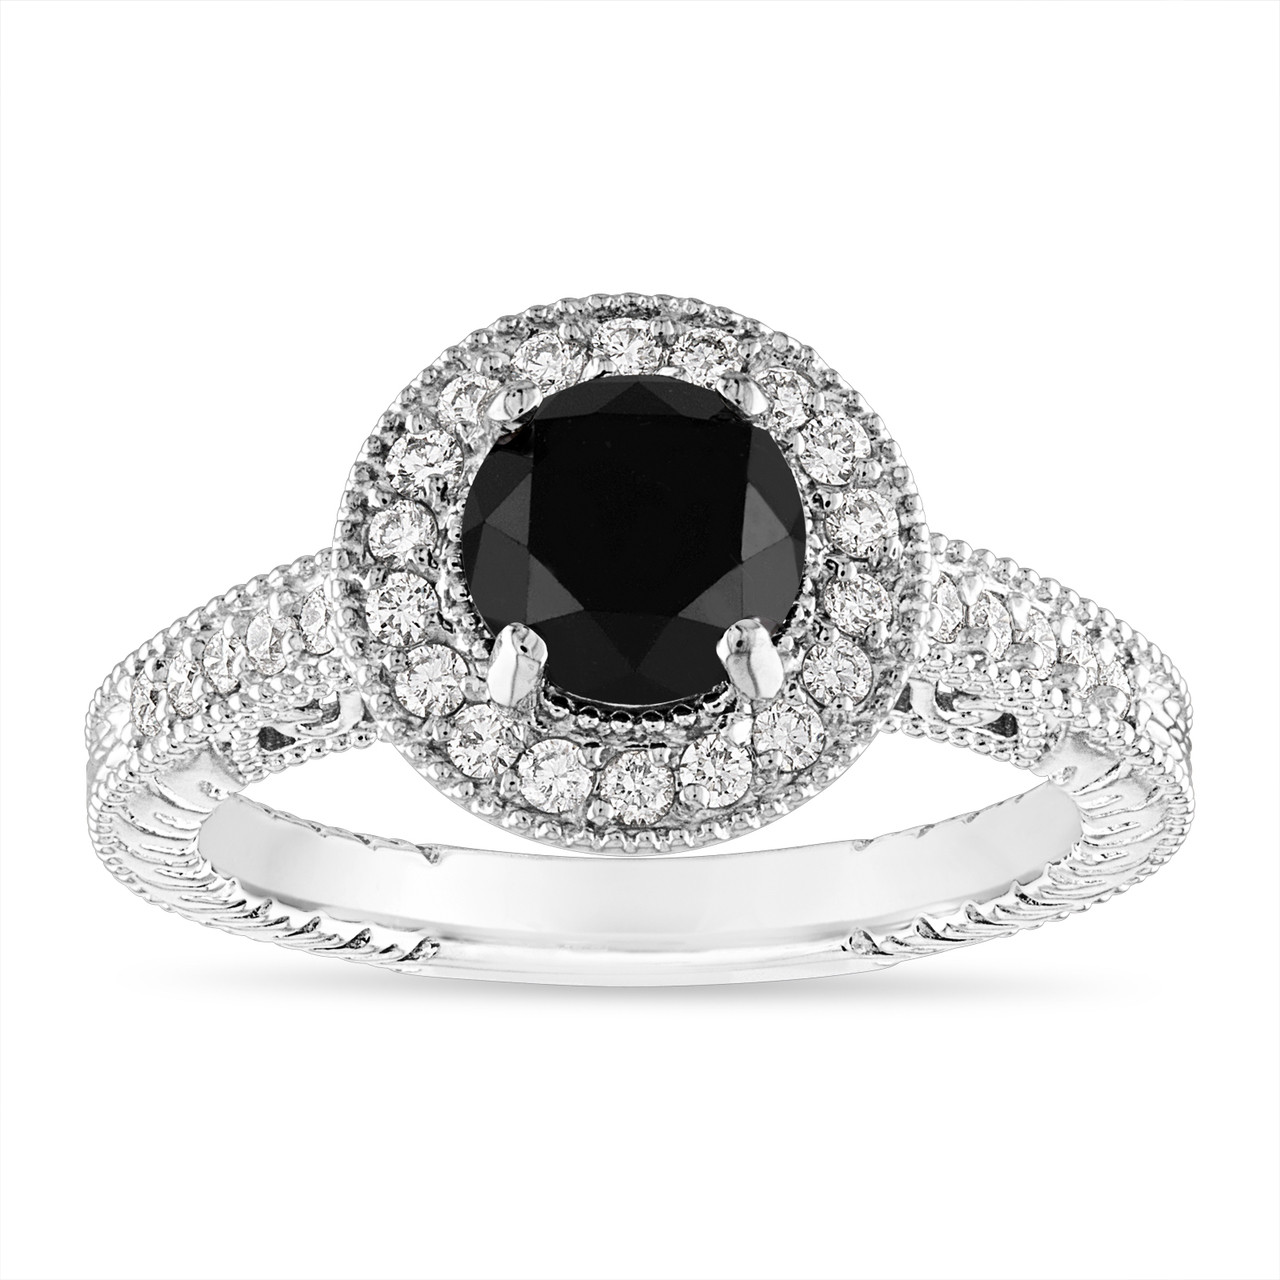 Wedding Rings Black Diamond
 1 48 Carat Black Diamond Engagement Ring Vintage Wedding